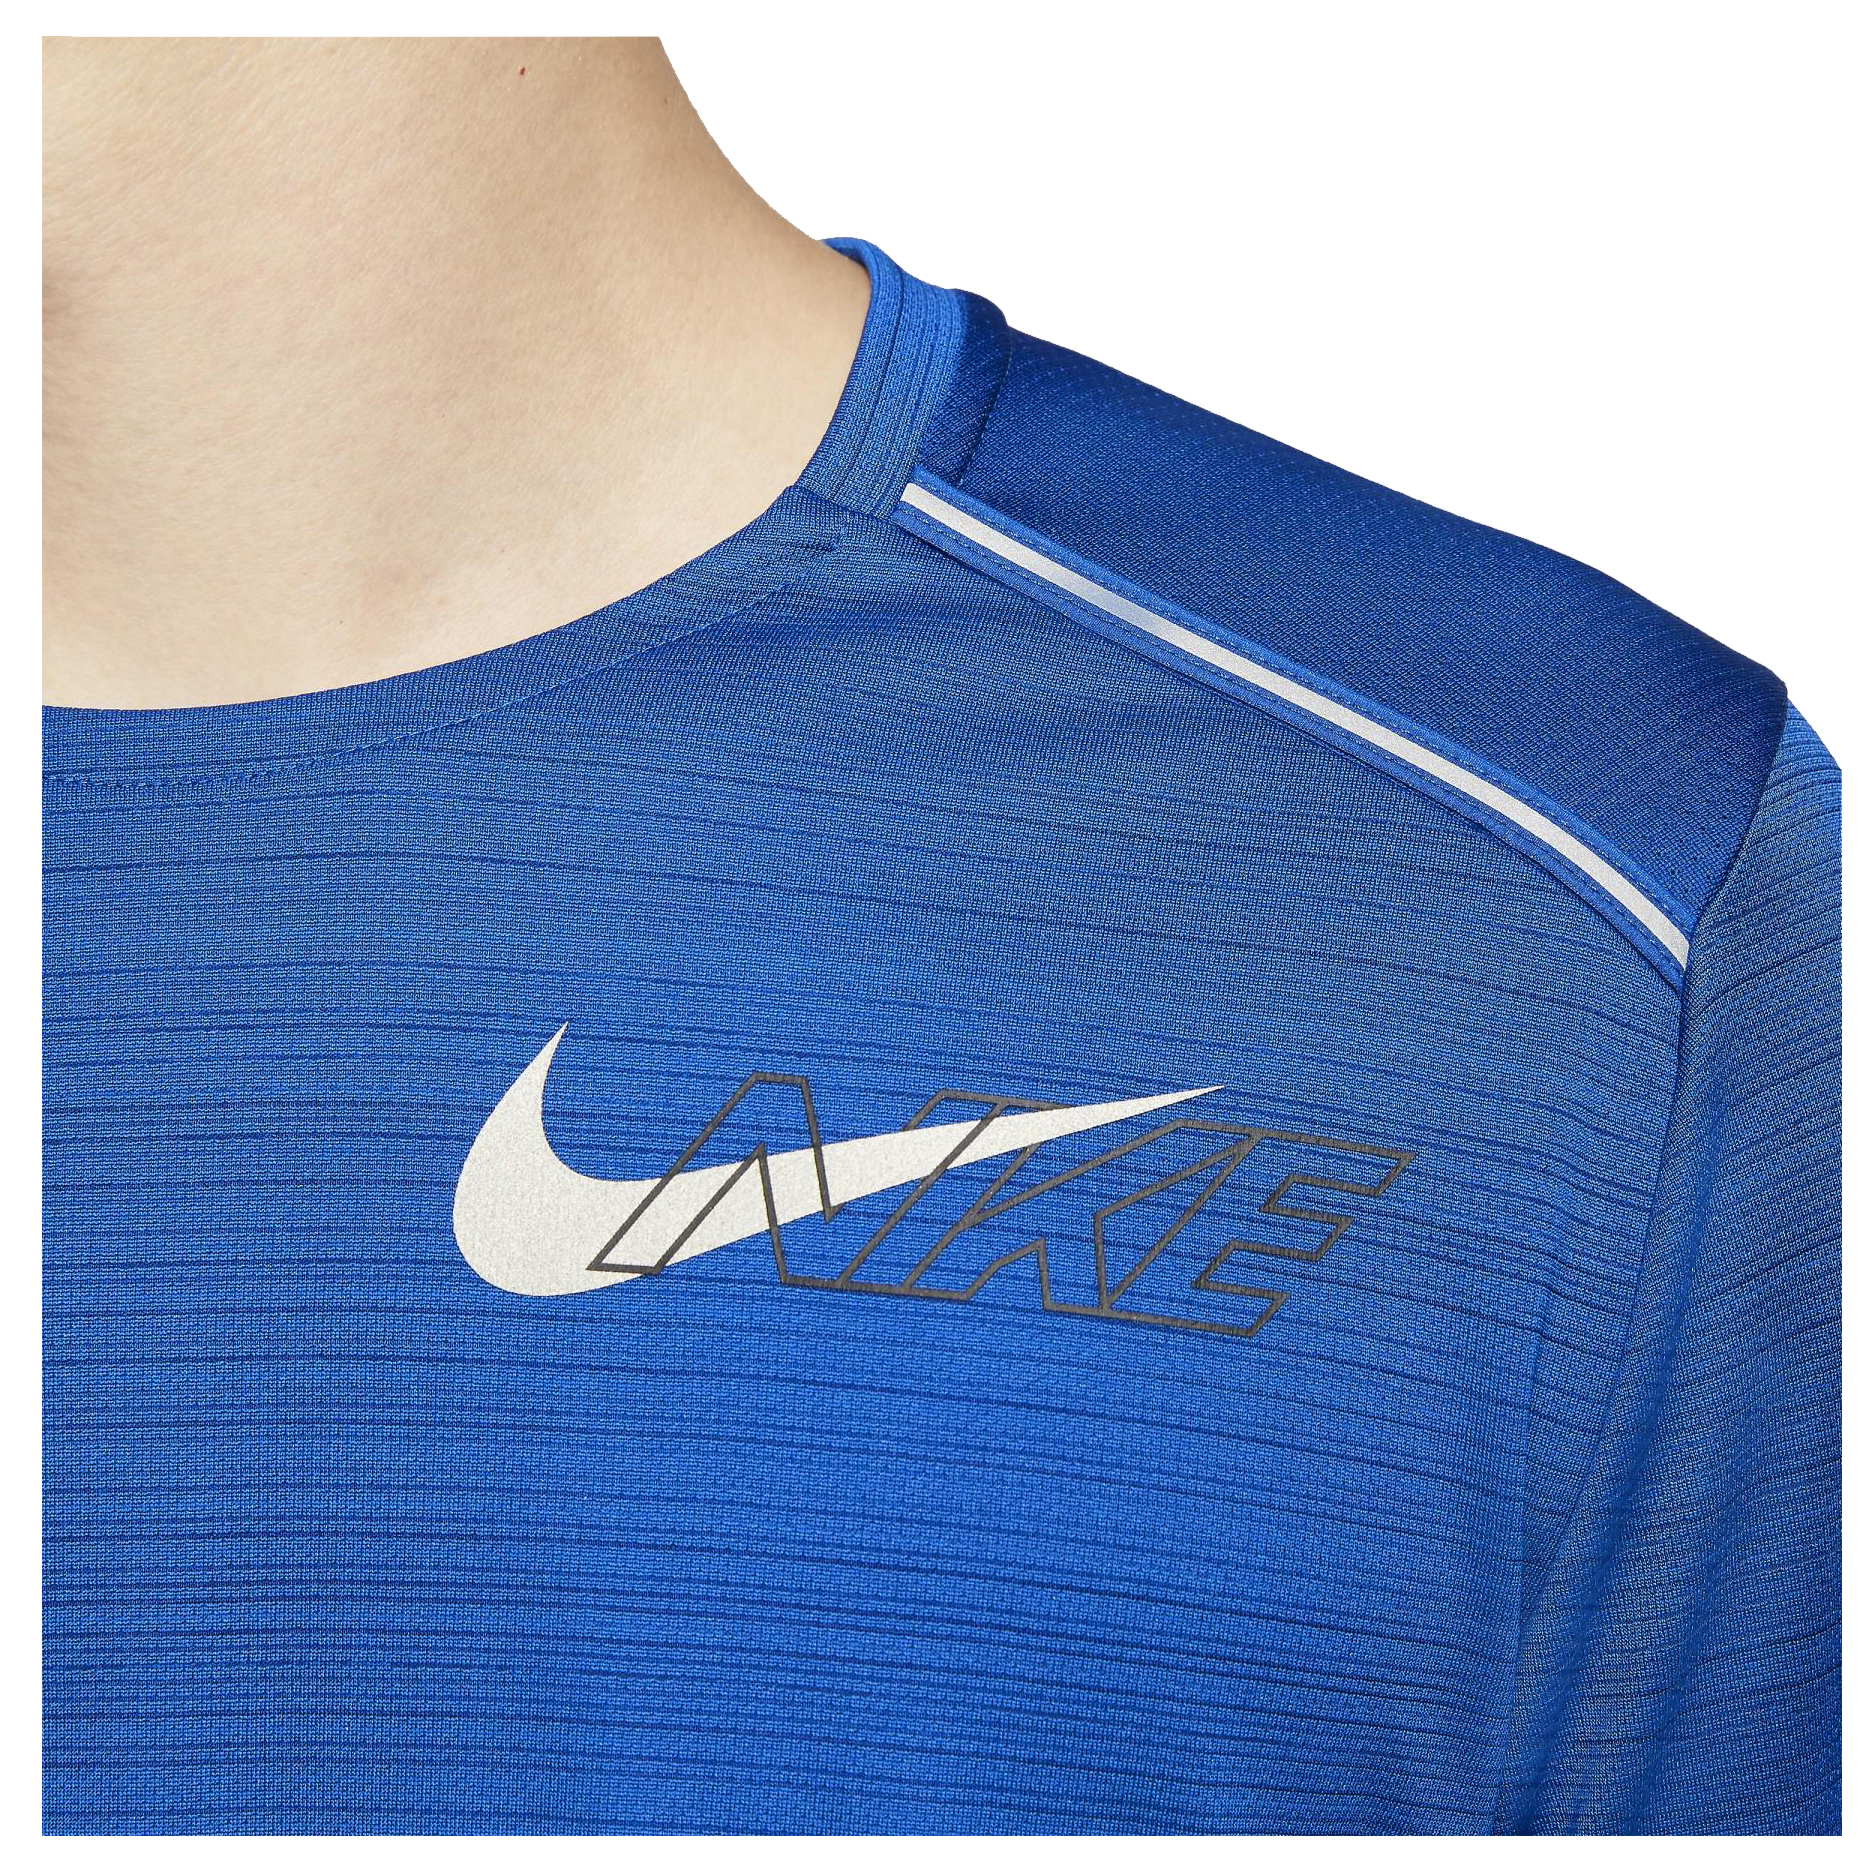 Nike Men's Dri-Fit Miler Long Sleeve Flash Running Shirt | eBay